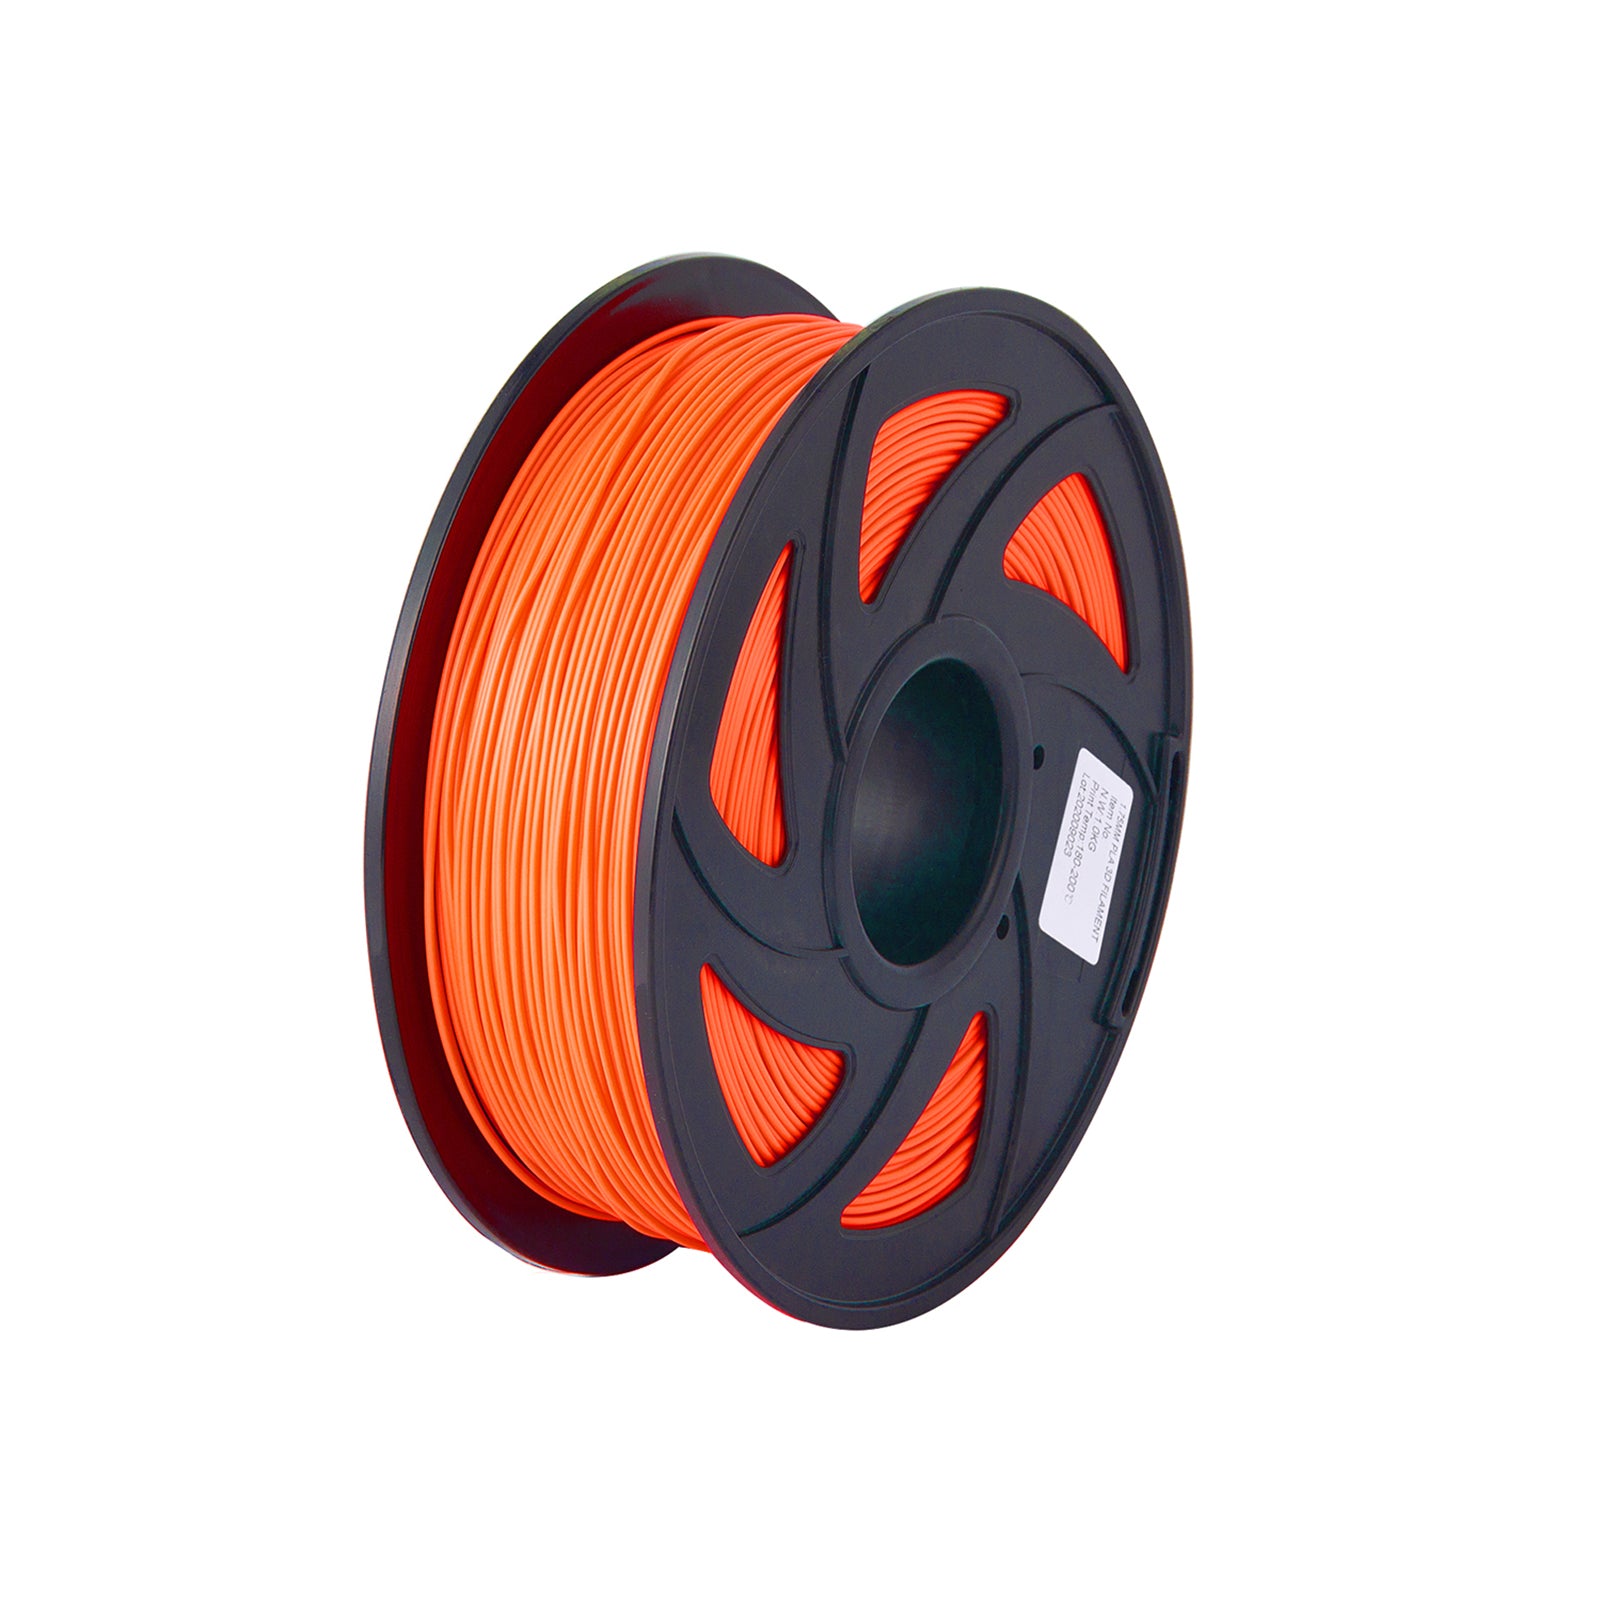 1kg Spool normal PLA Filament 1.75mm diameter printing consumables for most 3D Printers Grey Orange Light Purple Yellow